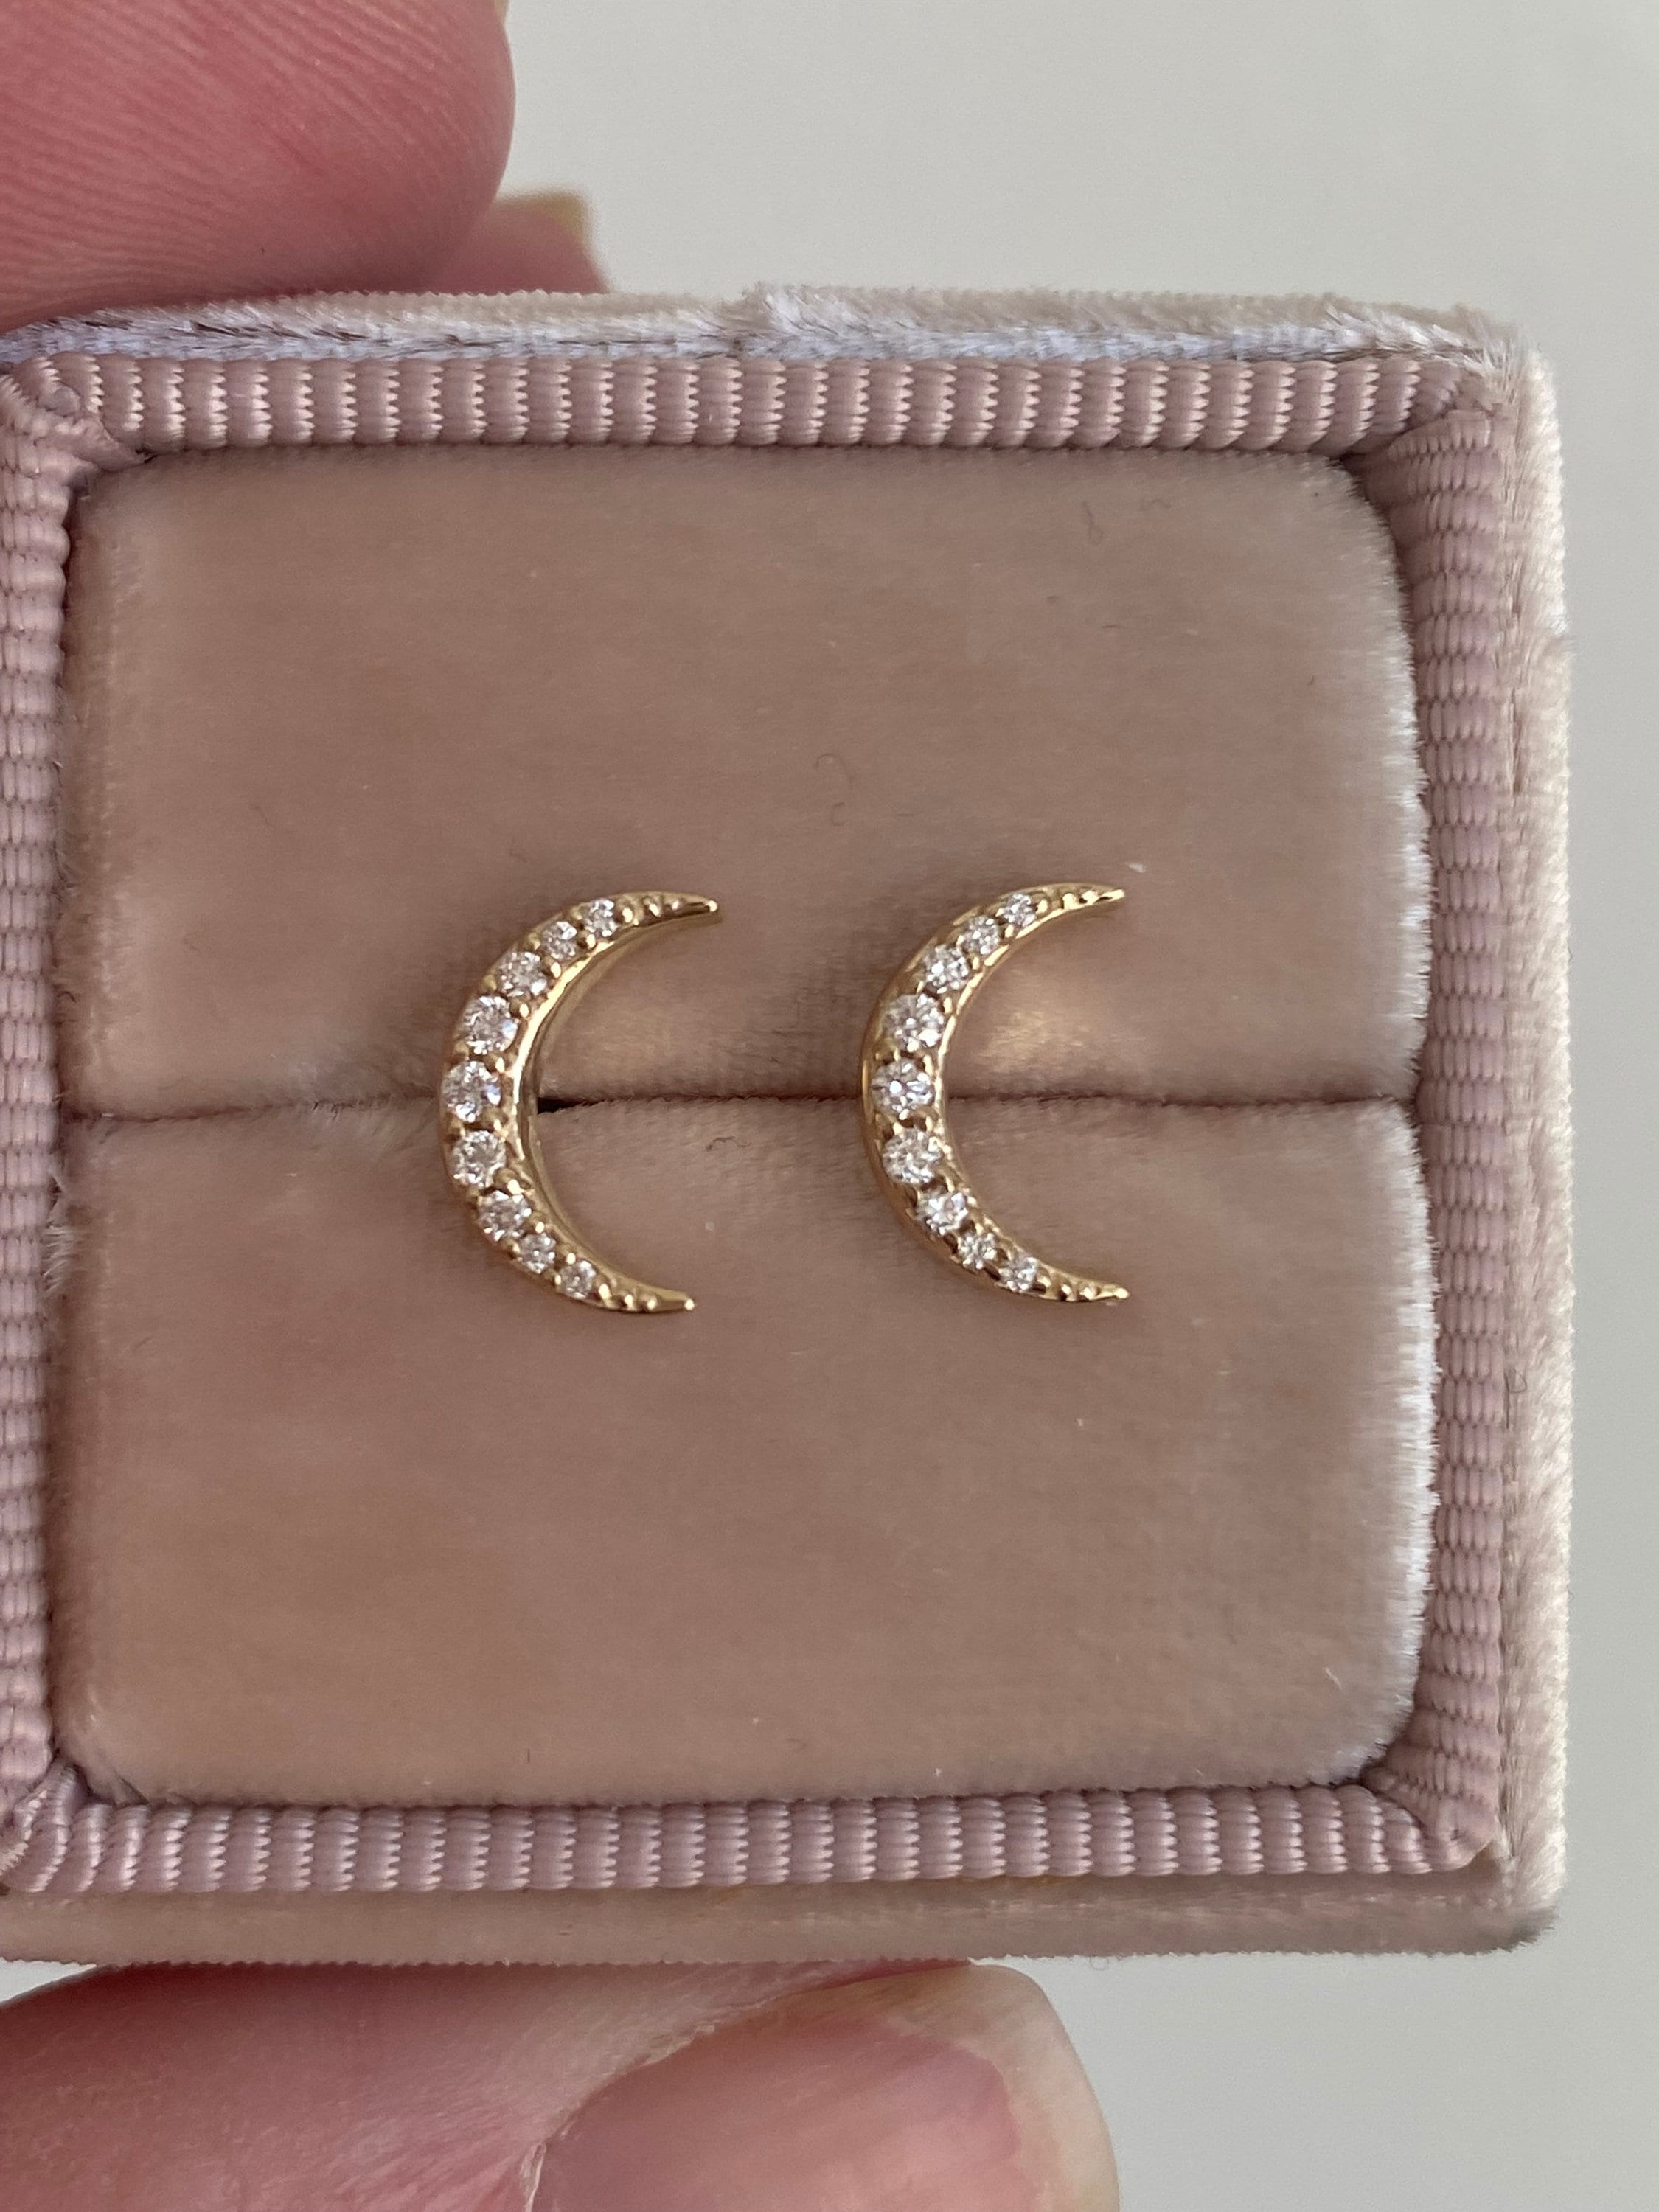 Crescent Moon Diamond Stud Earrings in Solid 14K Gold.